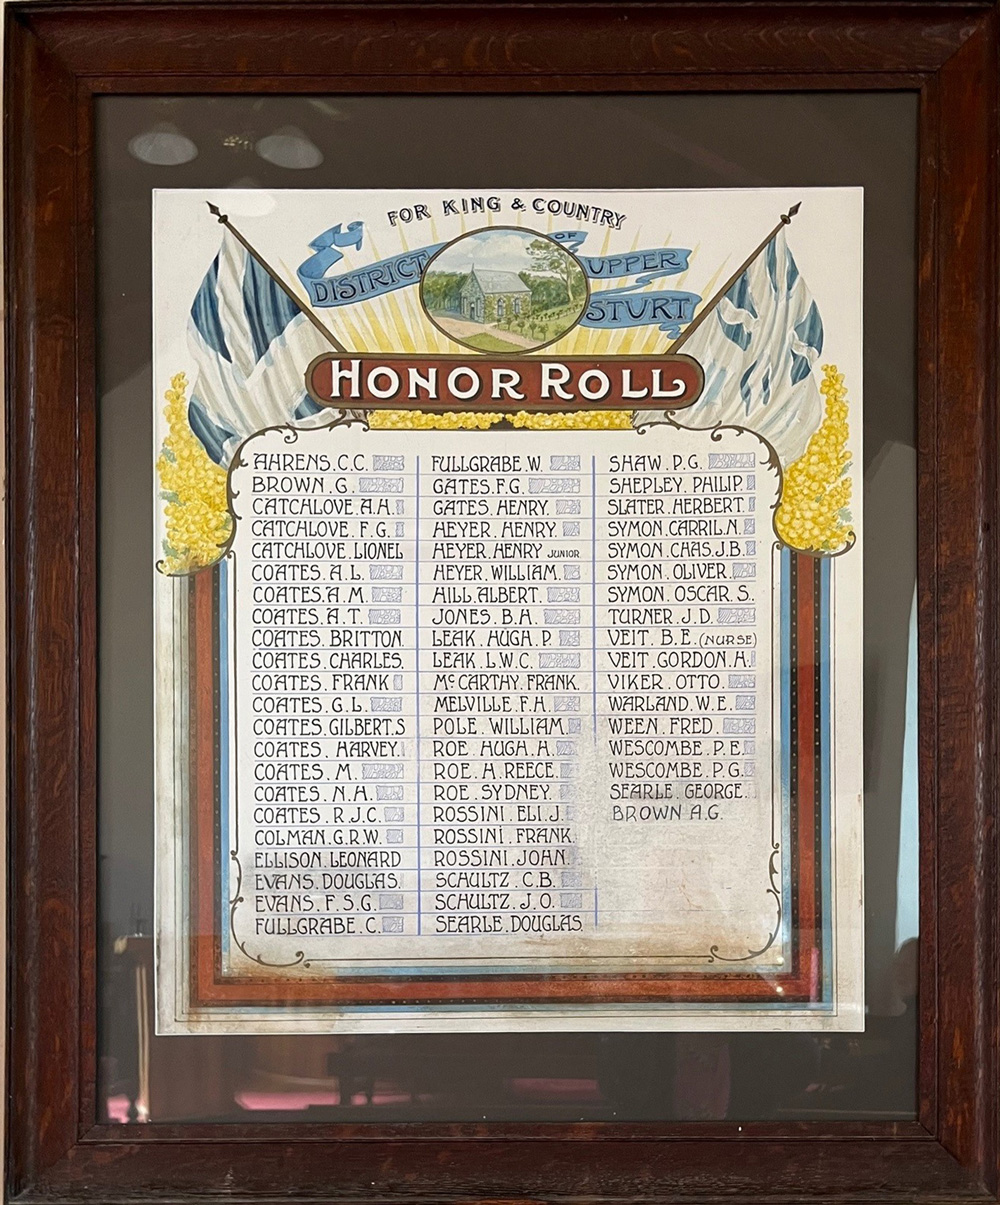 Honor Roll, District of Upper Sturt.